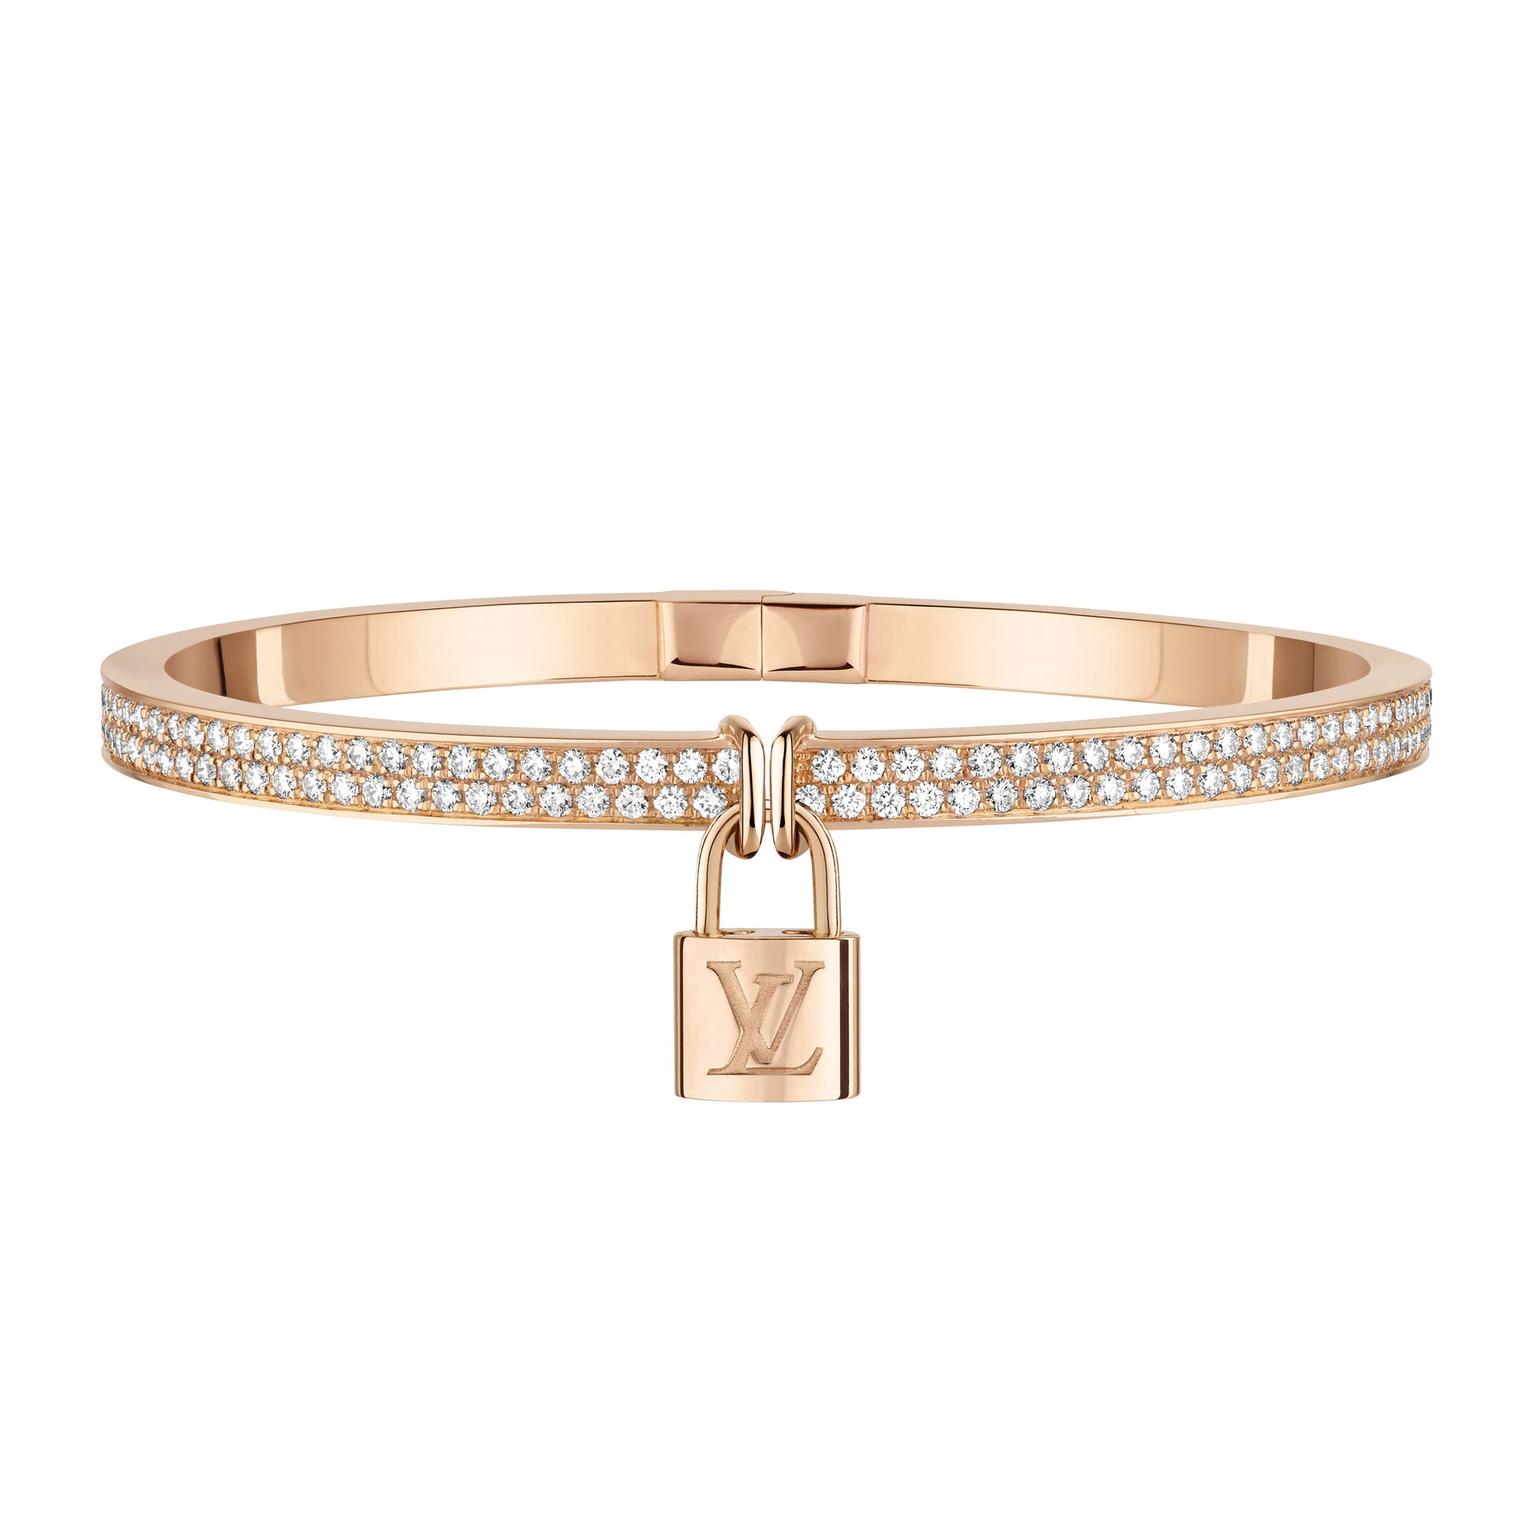 Bracelets for Women  Luxury Gold Silver Bangles  Cuffs  LOUIS VUITTON 